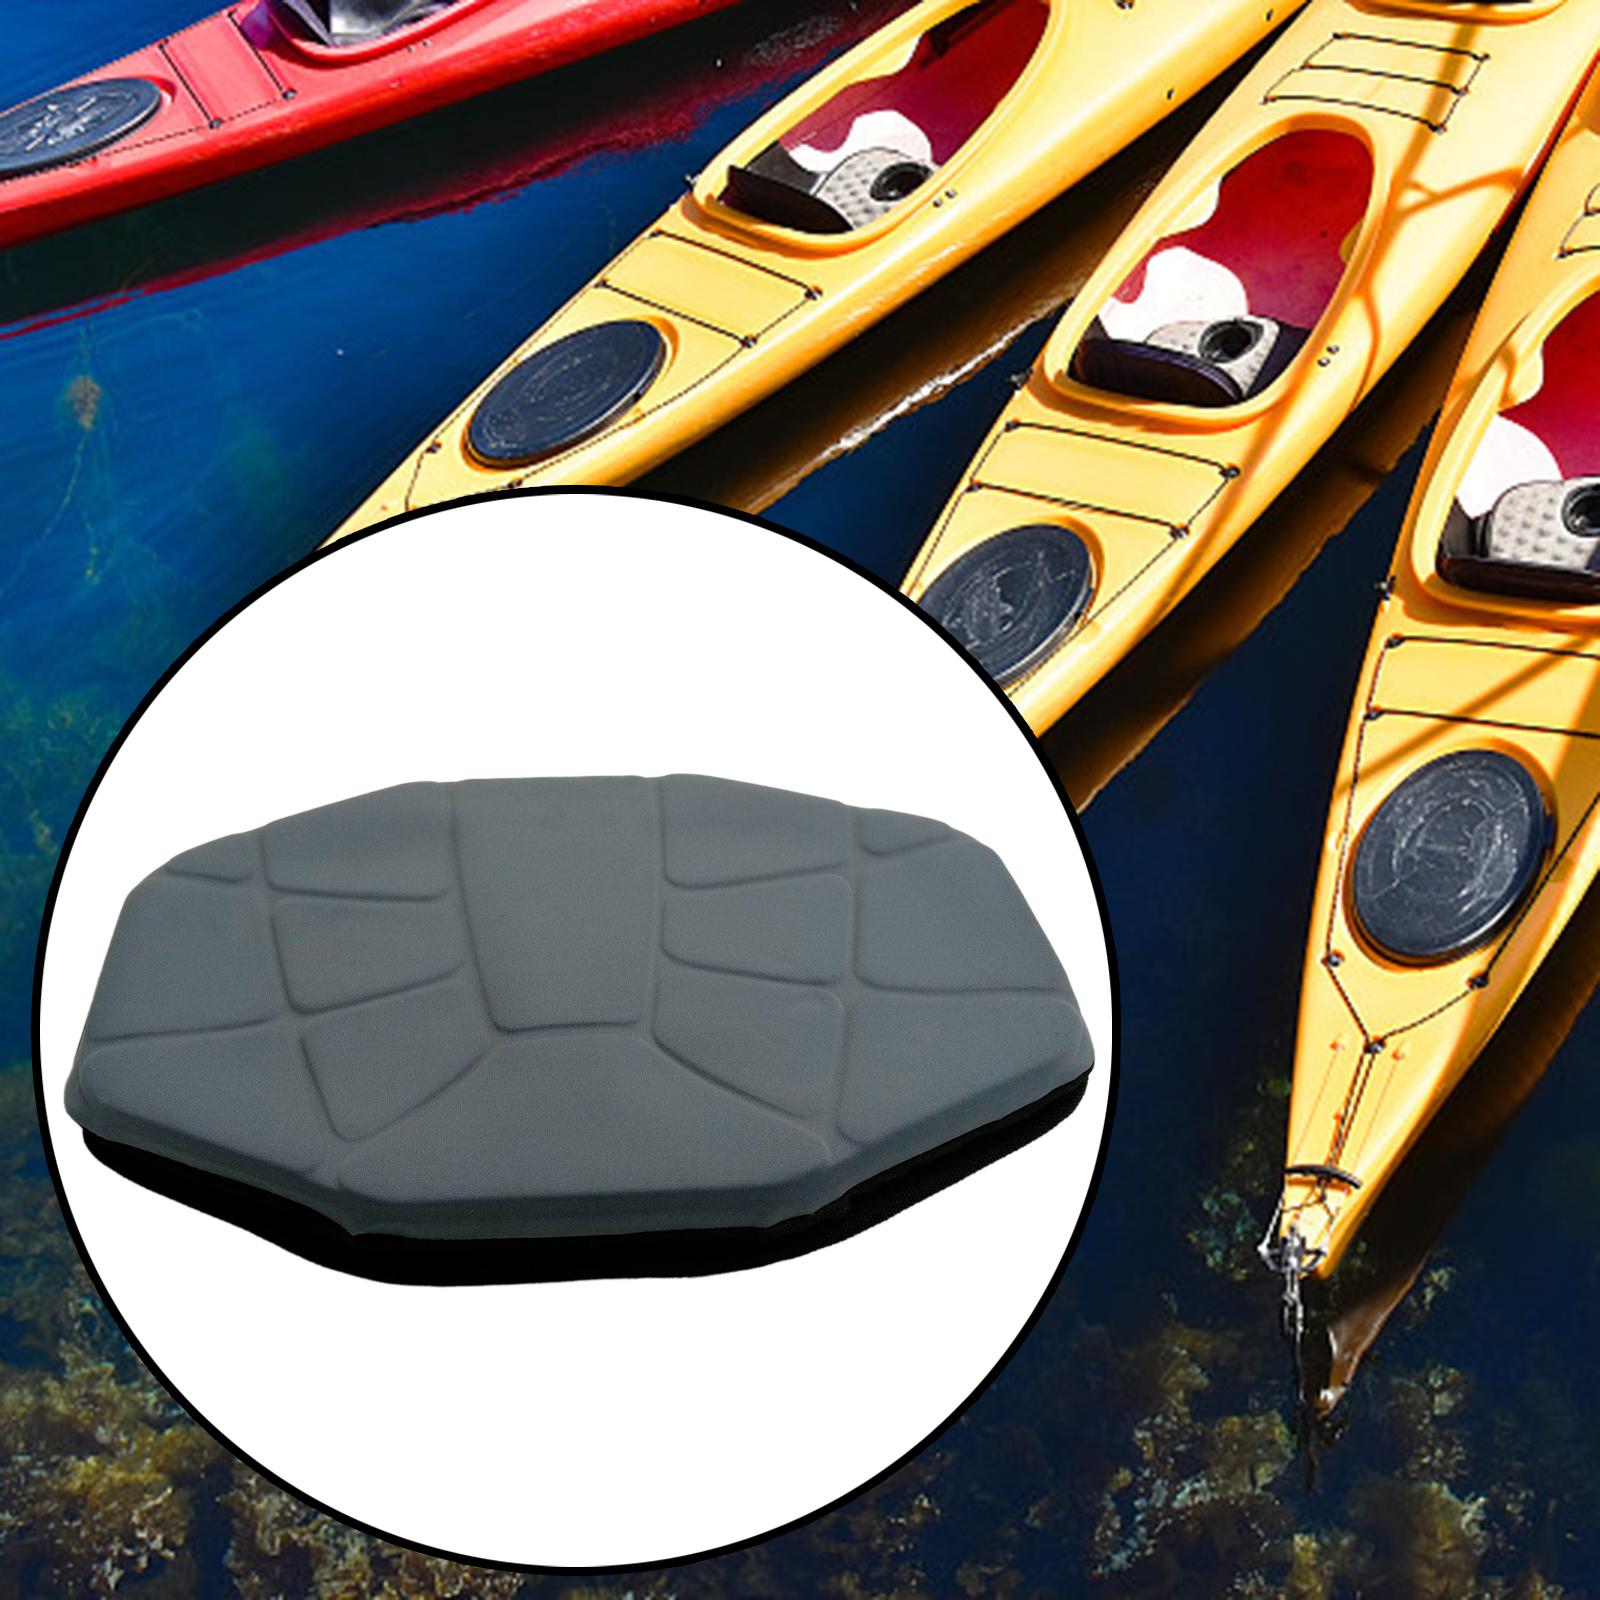 Kayak Seat Cushion Canoe Seat Cushion for Inflatable Kayak Canoe Accessories